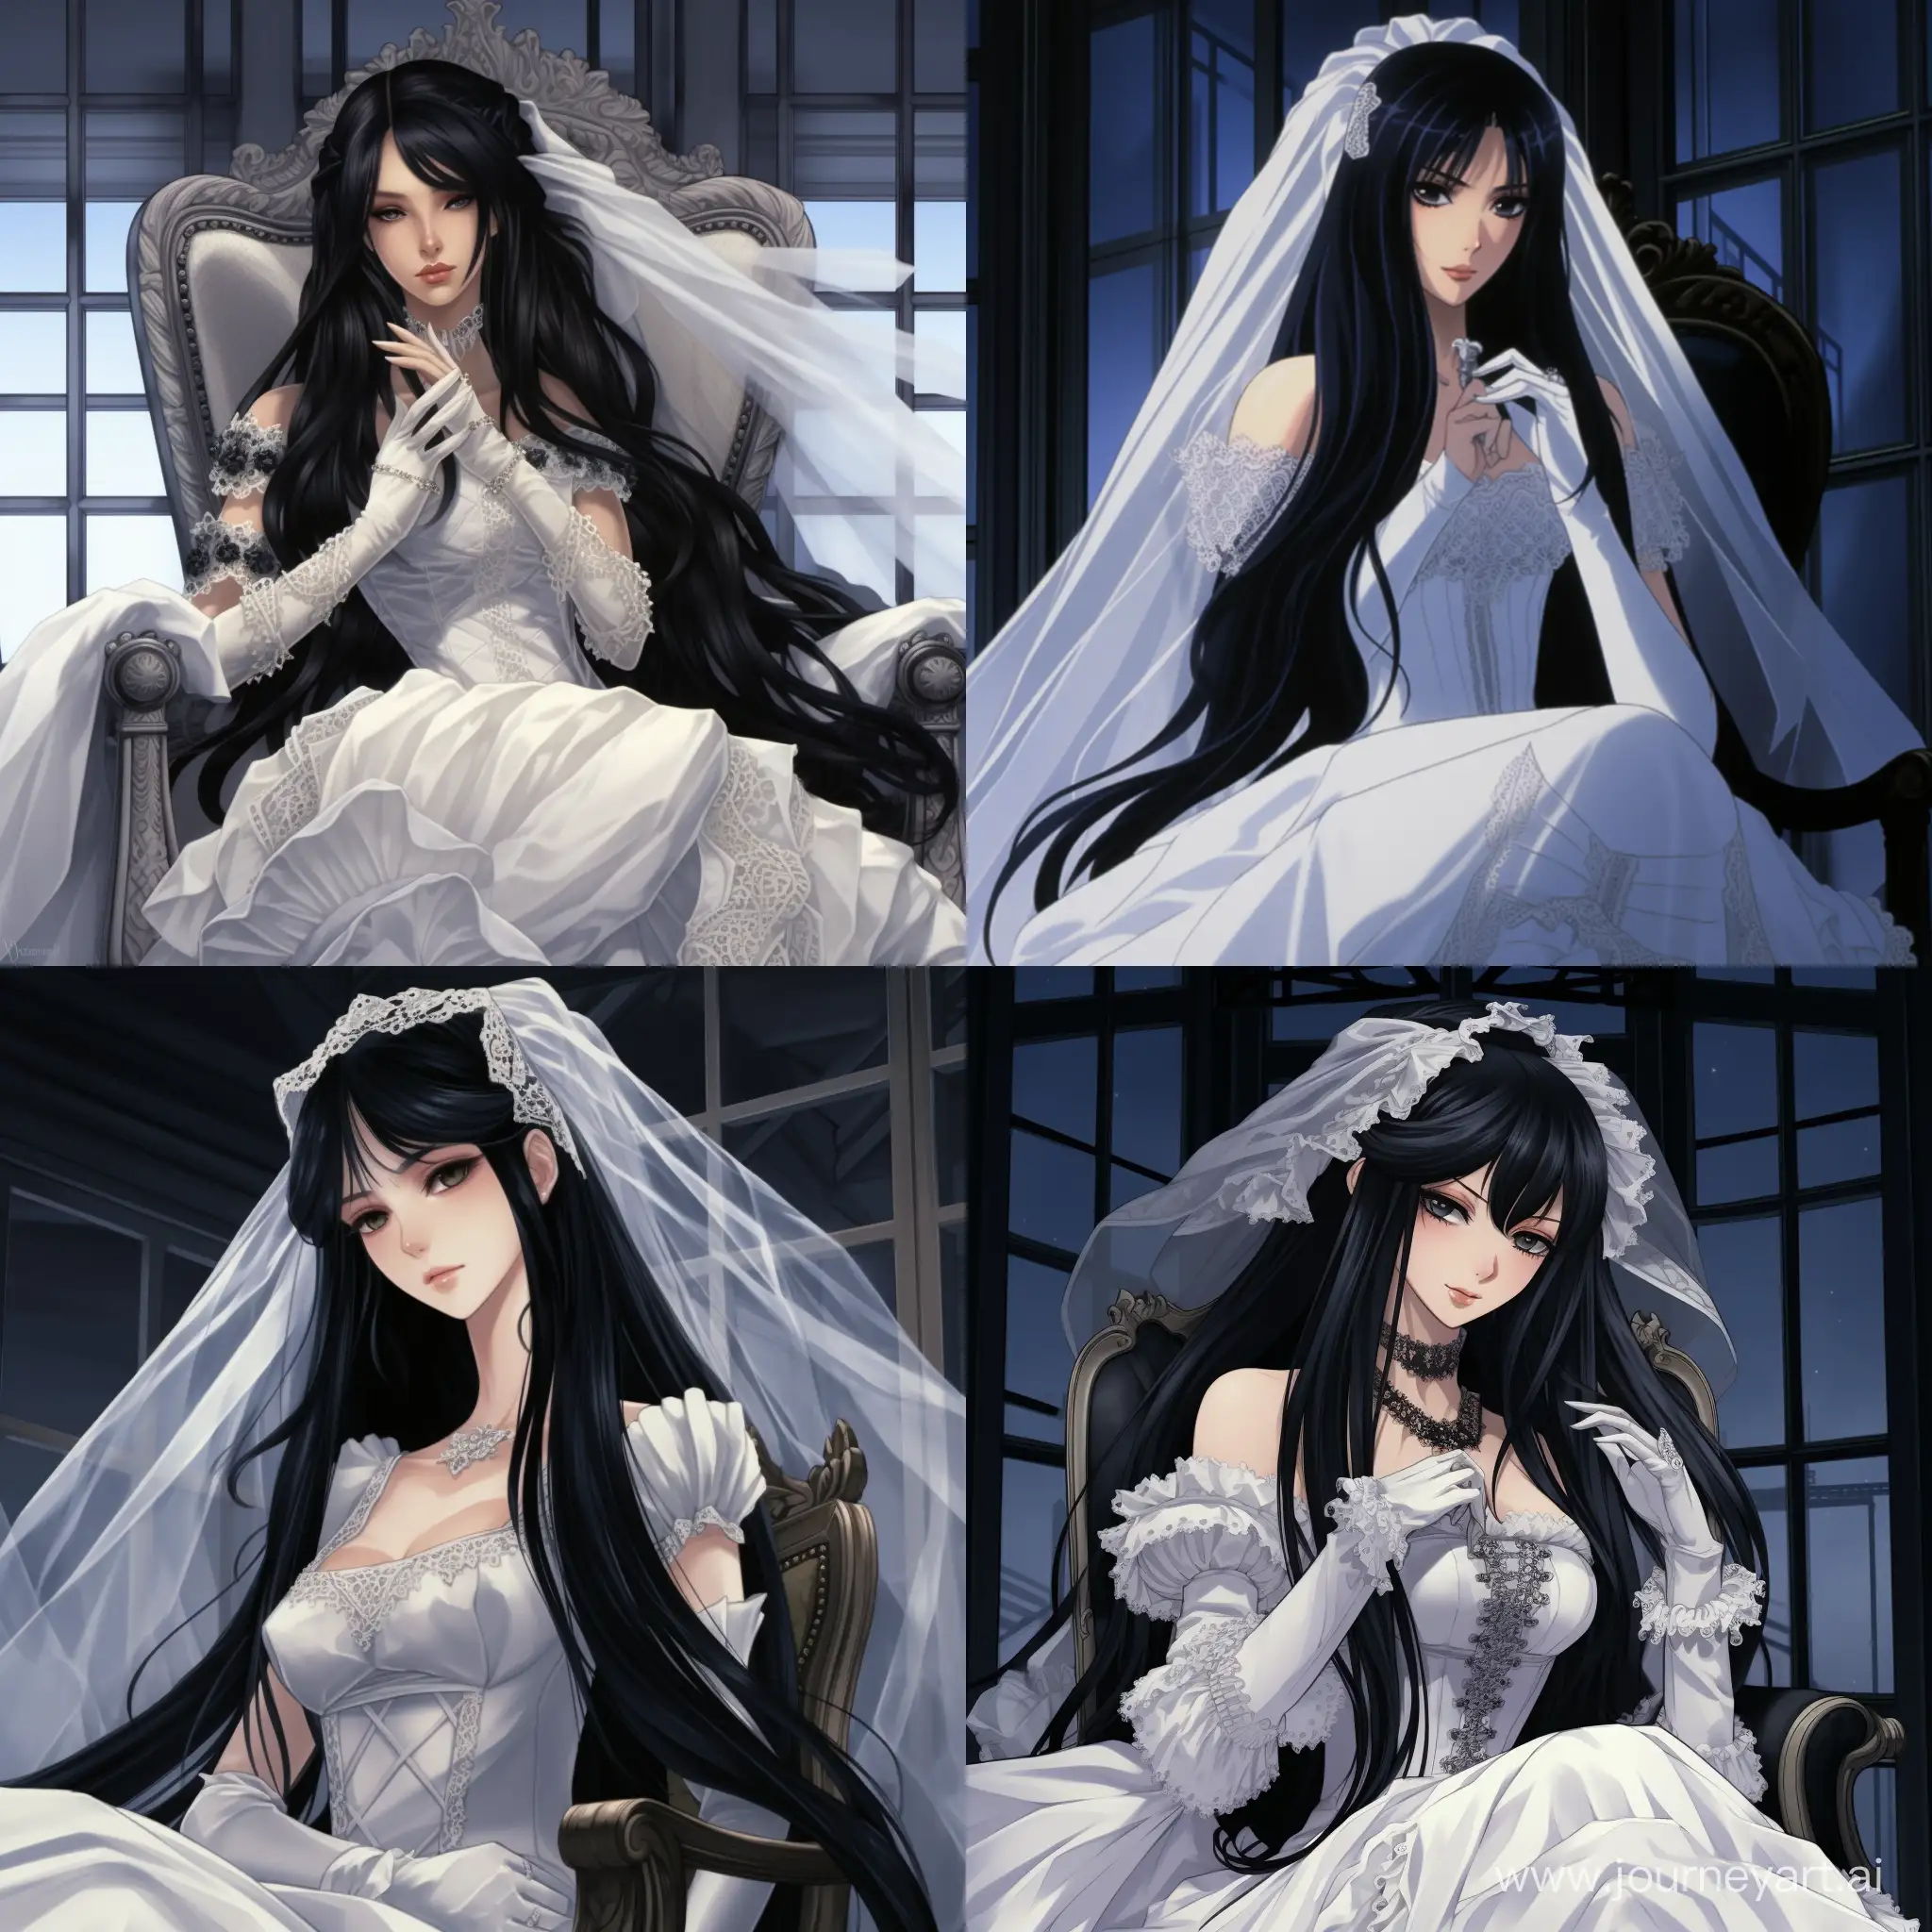 Elegant-Anime-Bride-in-White-Wedding-Attire-with-Blue-Eyes